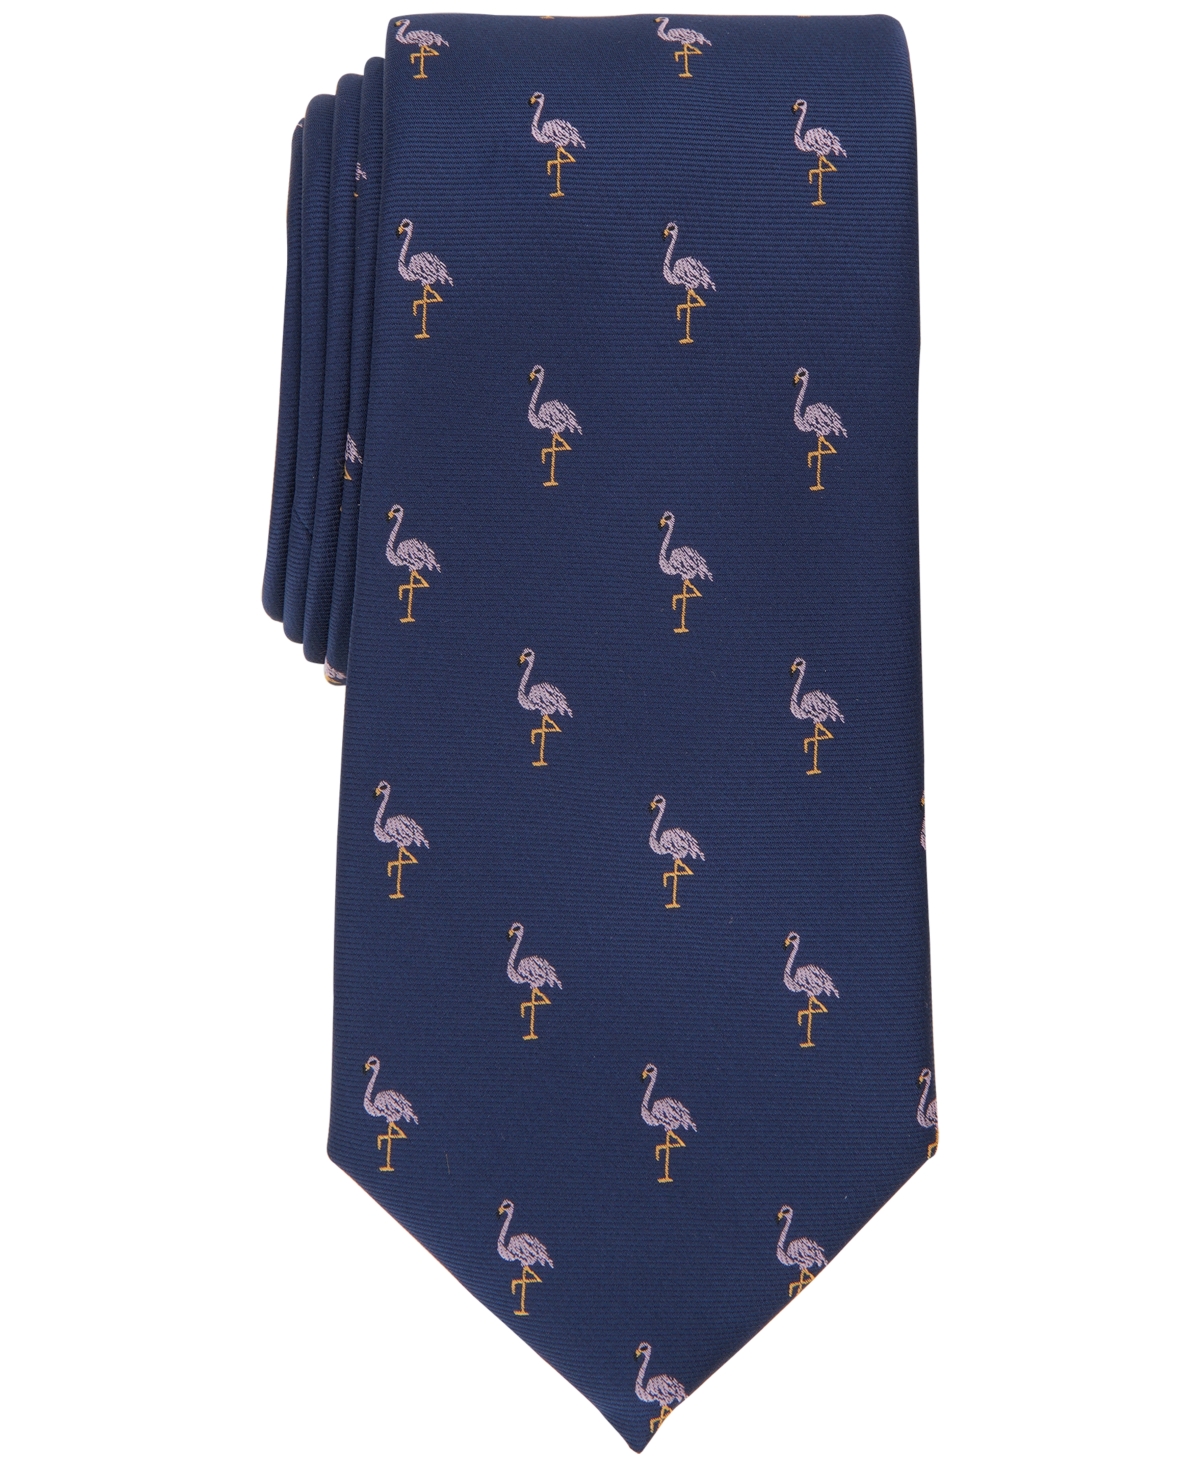 Men's Classic Flamingo Conversational Tie, Created for Macy's - Navy